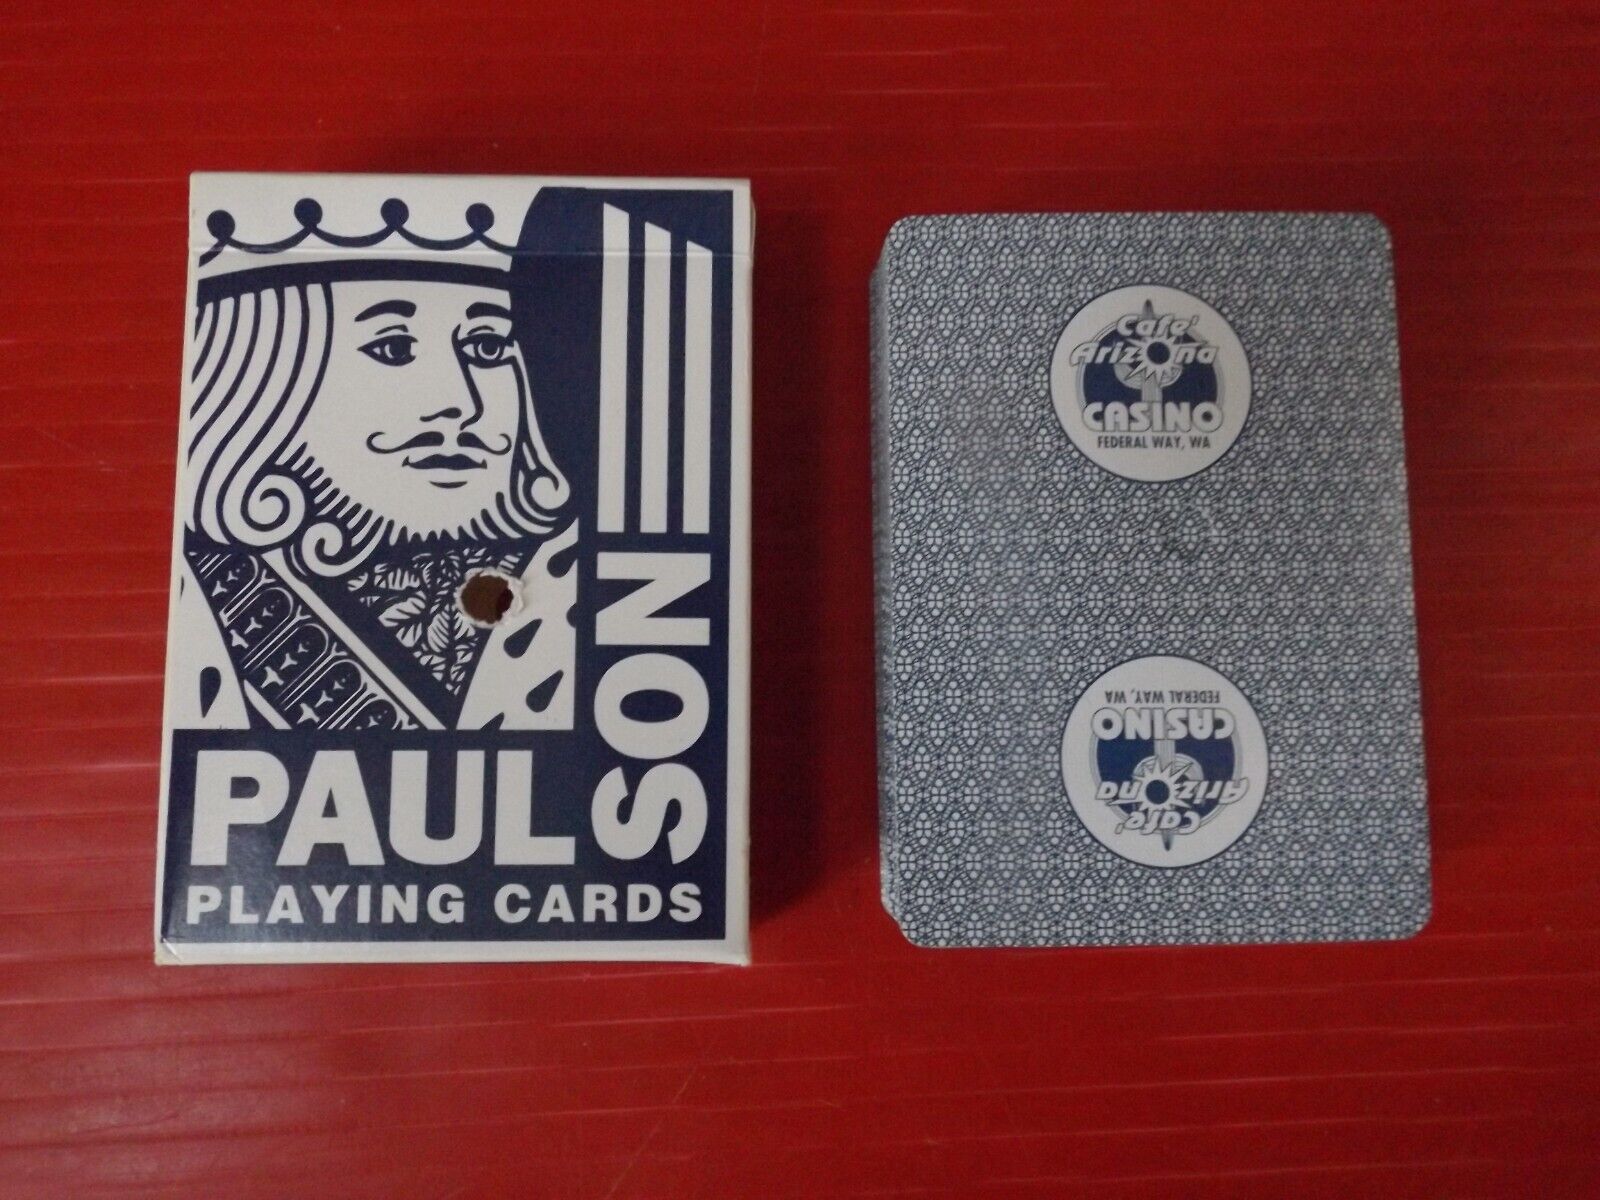 VTG Cafe\' Arizona casino playing cards PaulSon Federal Way, WA # 336 Private col